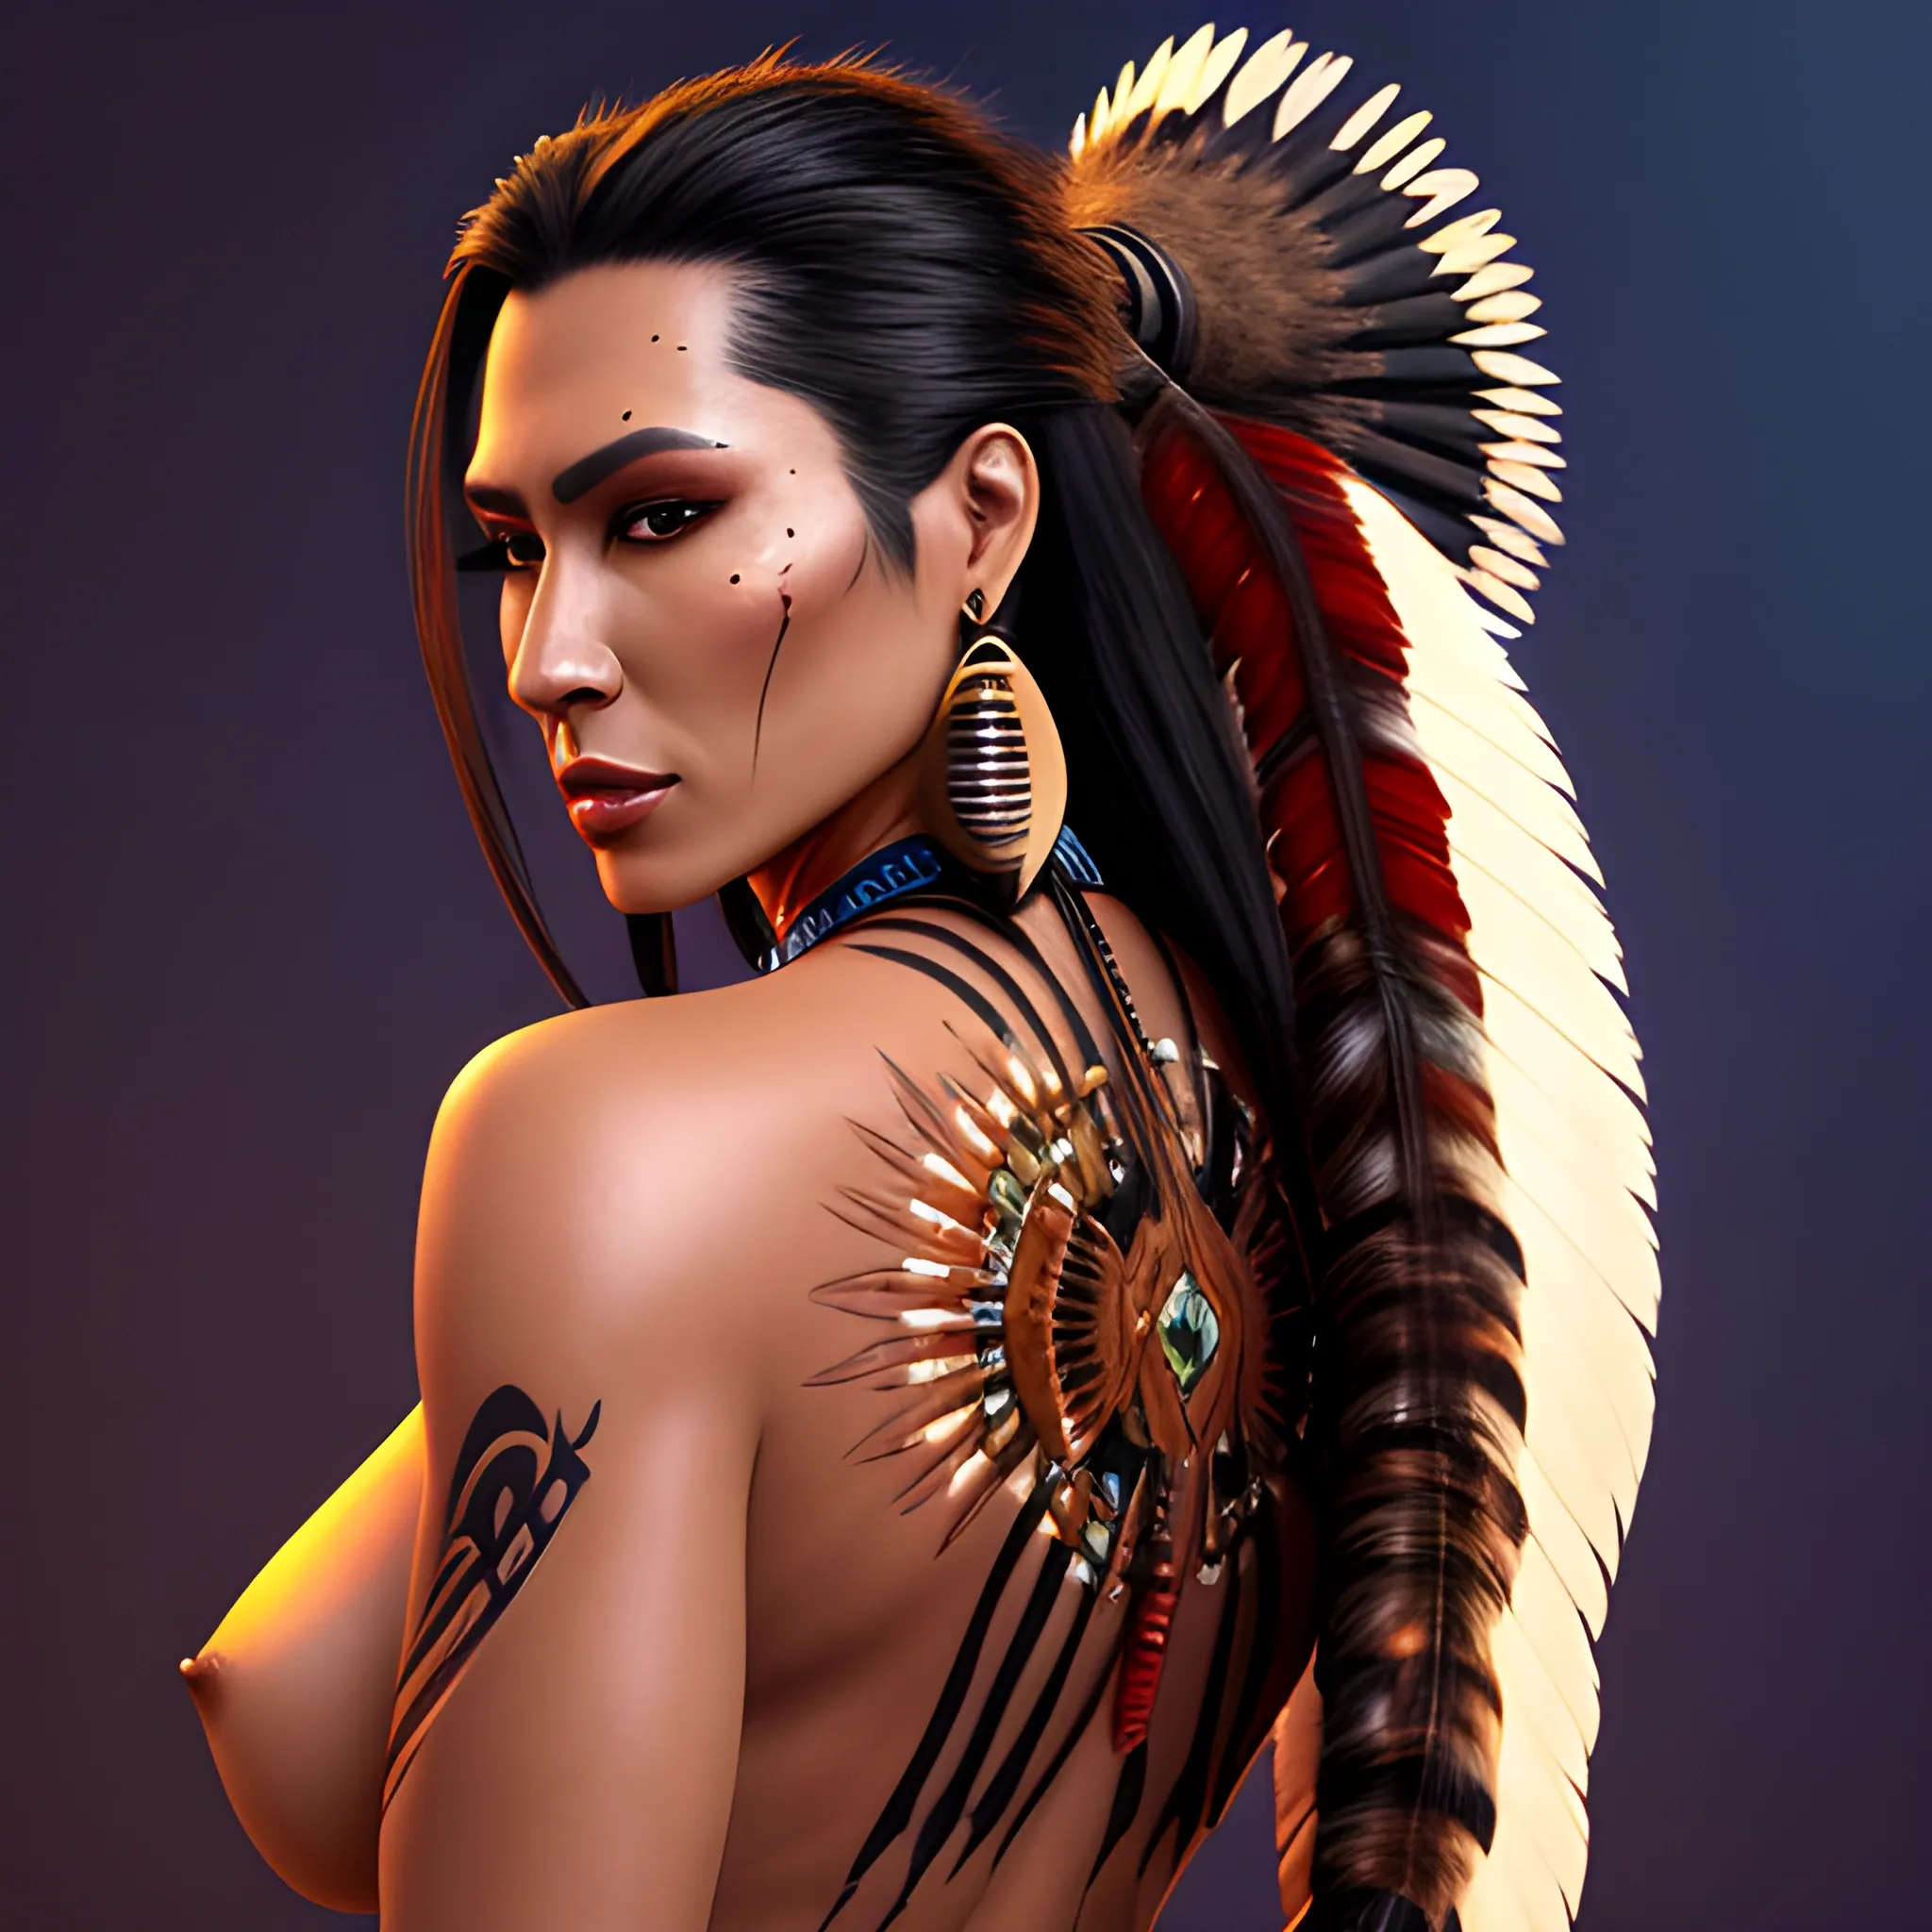 a native american sexy woman))),Style: Biopunk, Medium: Digit 